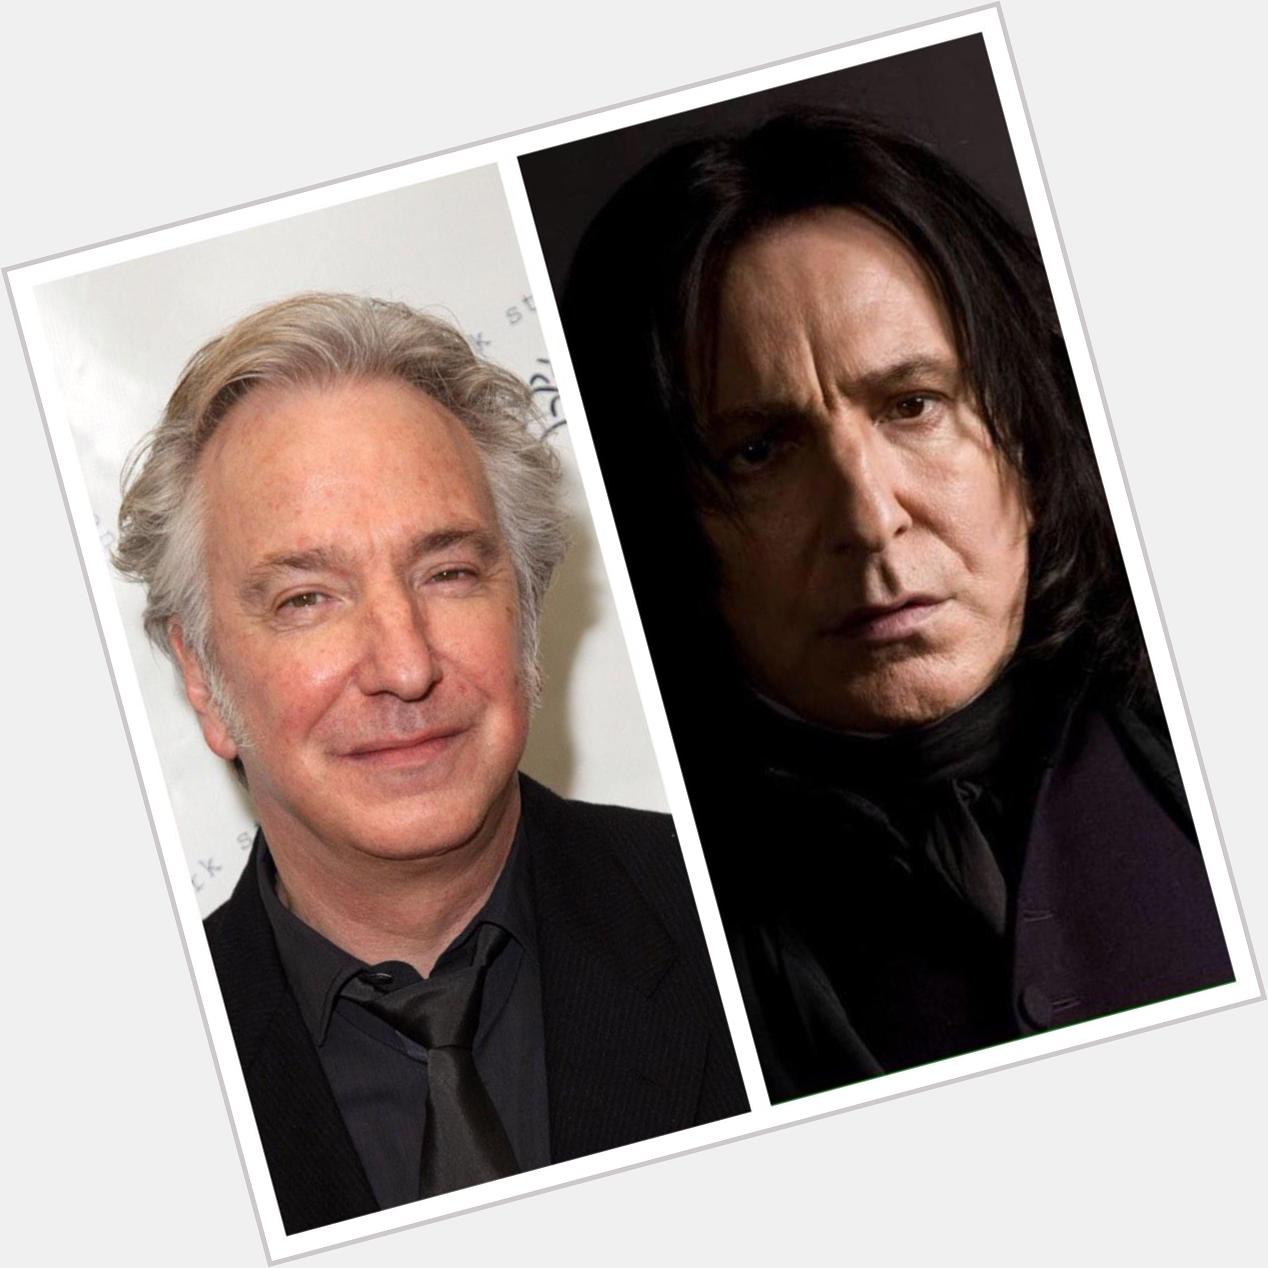 Feb. 21: Happy Birthday, Alan Rickman! He brilliantly portrayed Severus Snape in the films. 